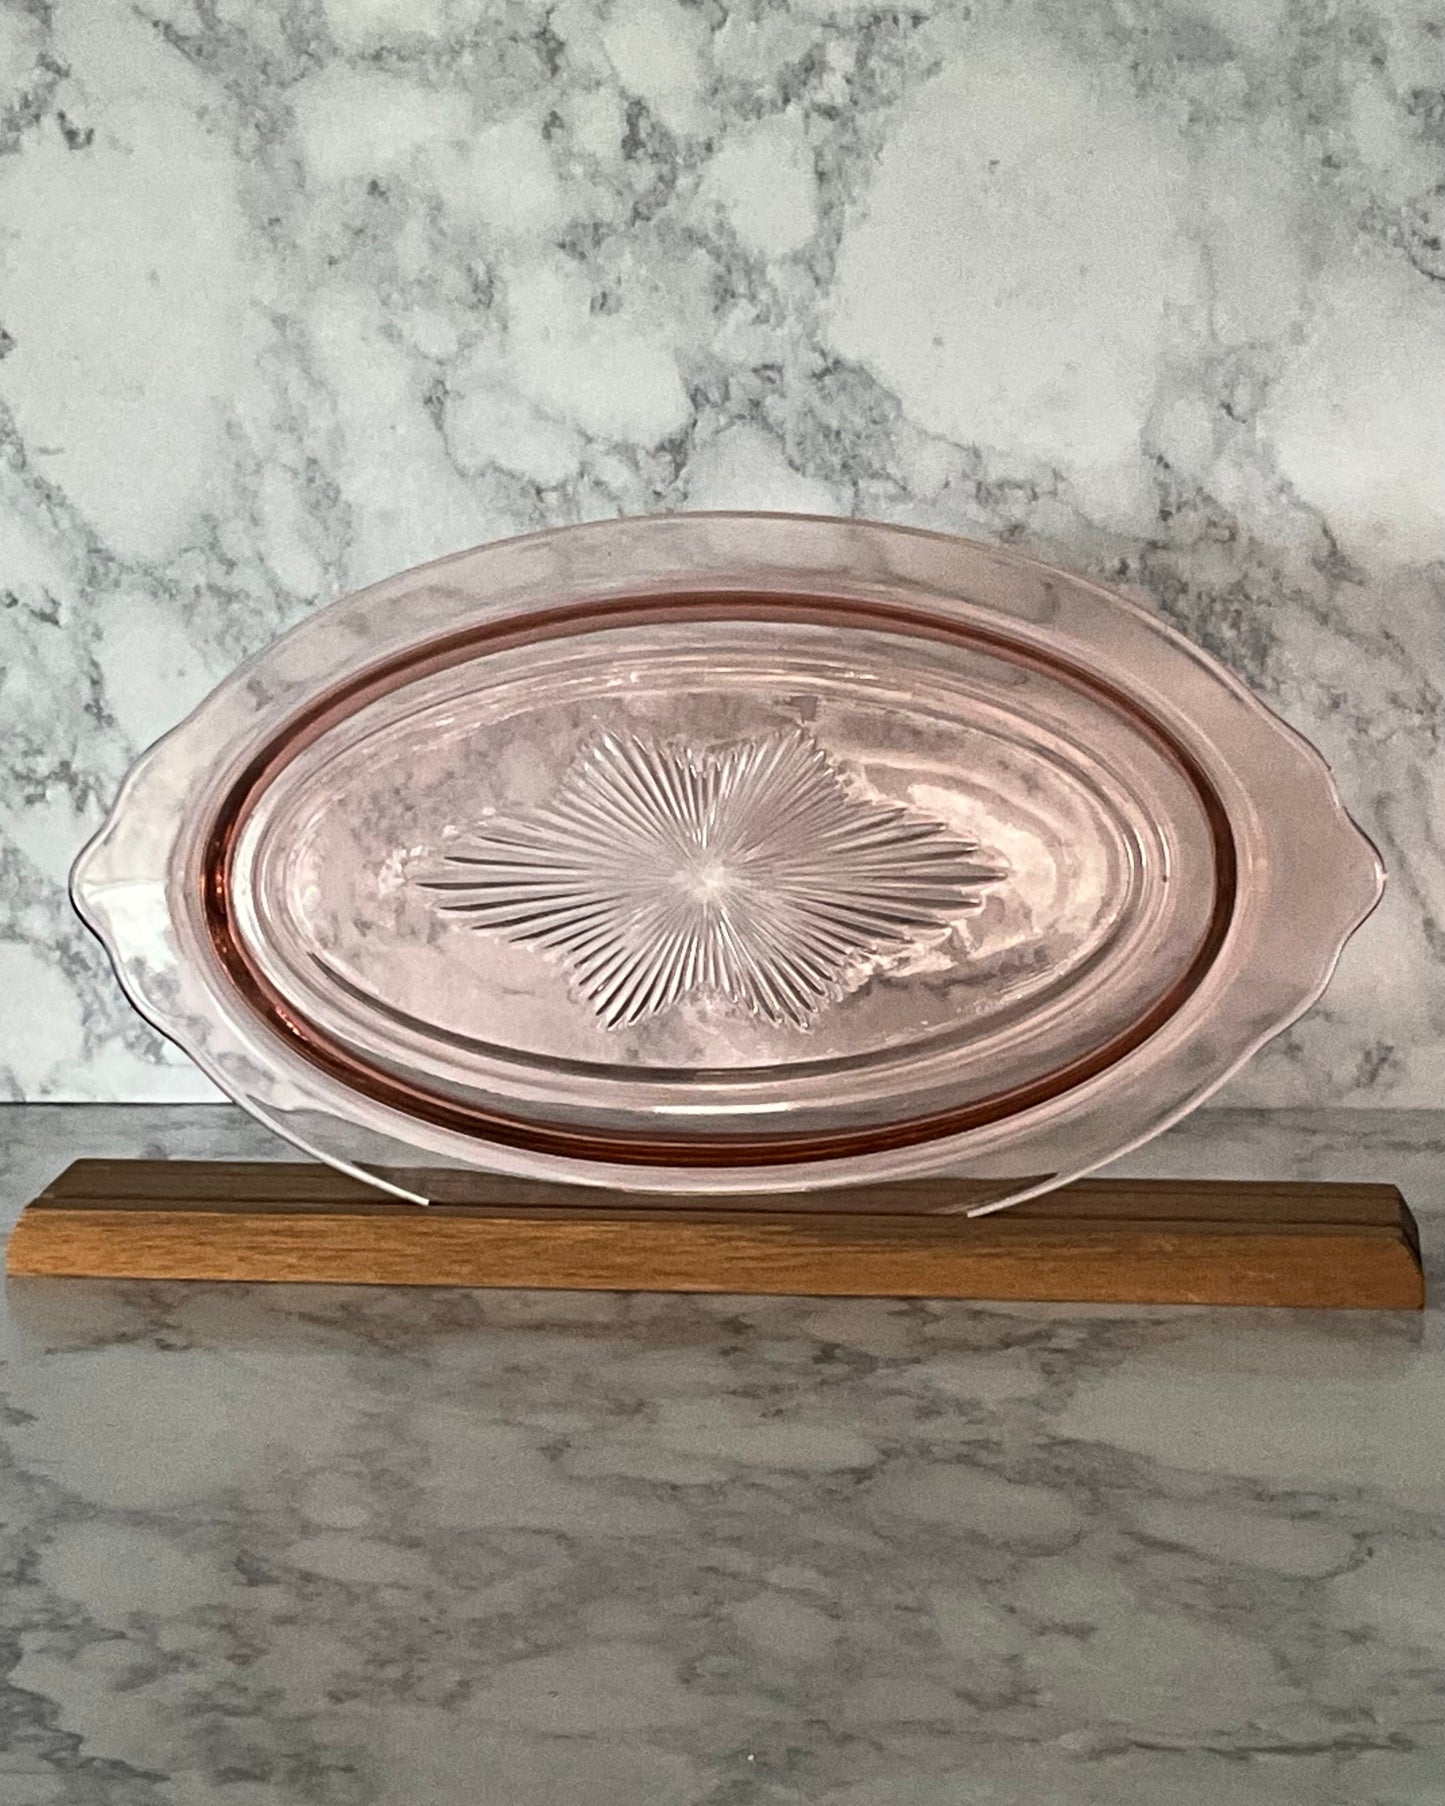 Macbeth Evans Petalware Pink Oval Platter